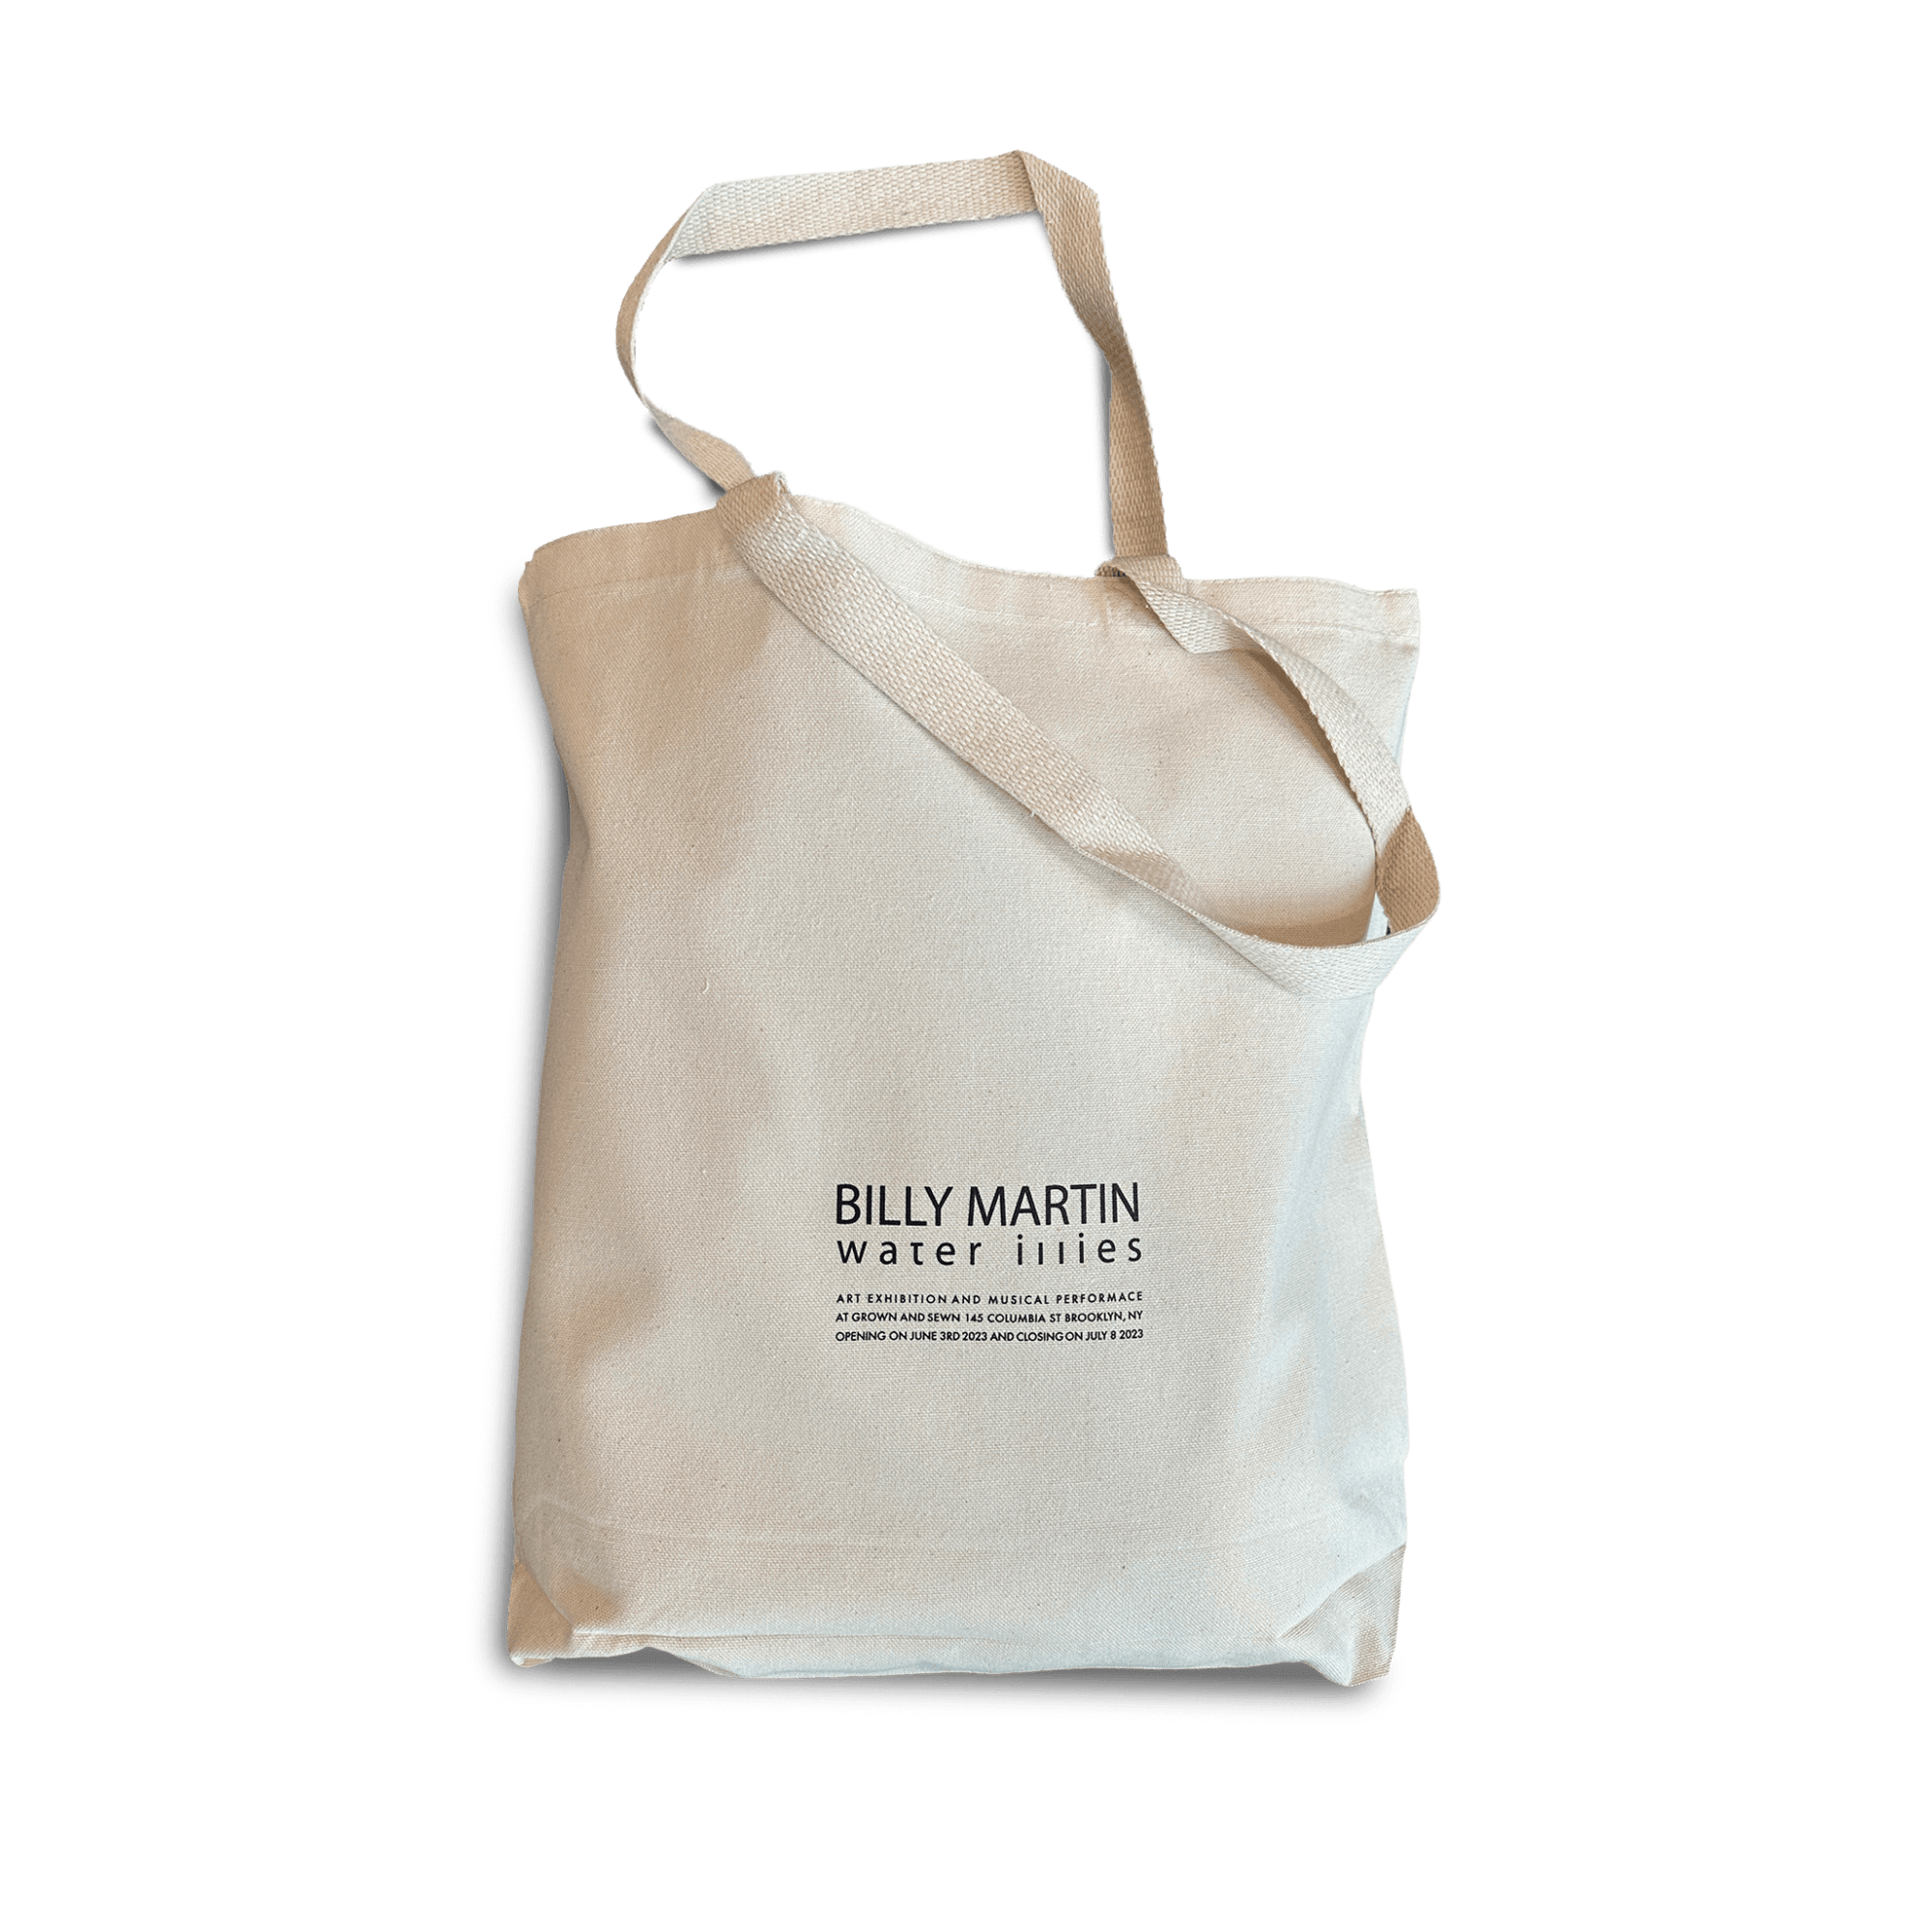 Billy Martin "Water illies" Tote Bag - Humanoids - grown&sewn